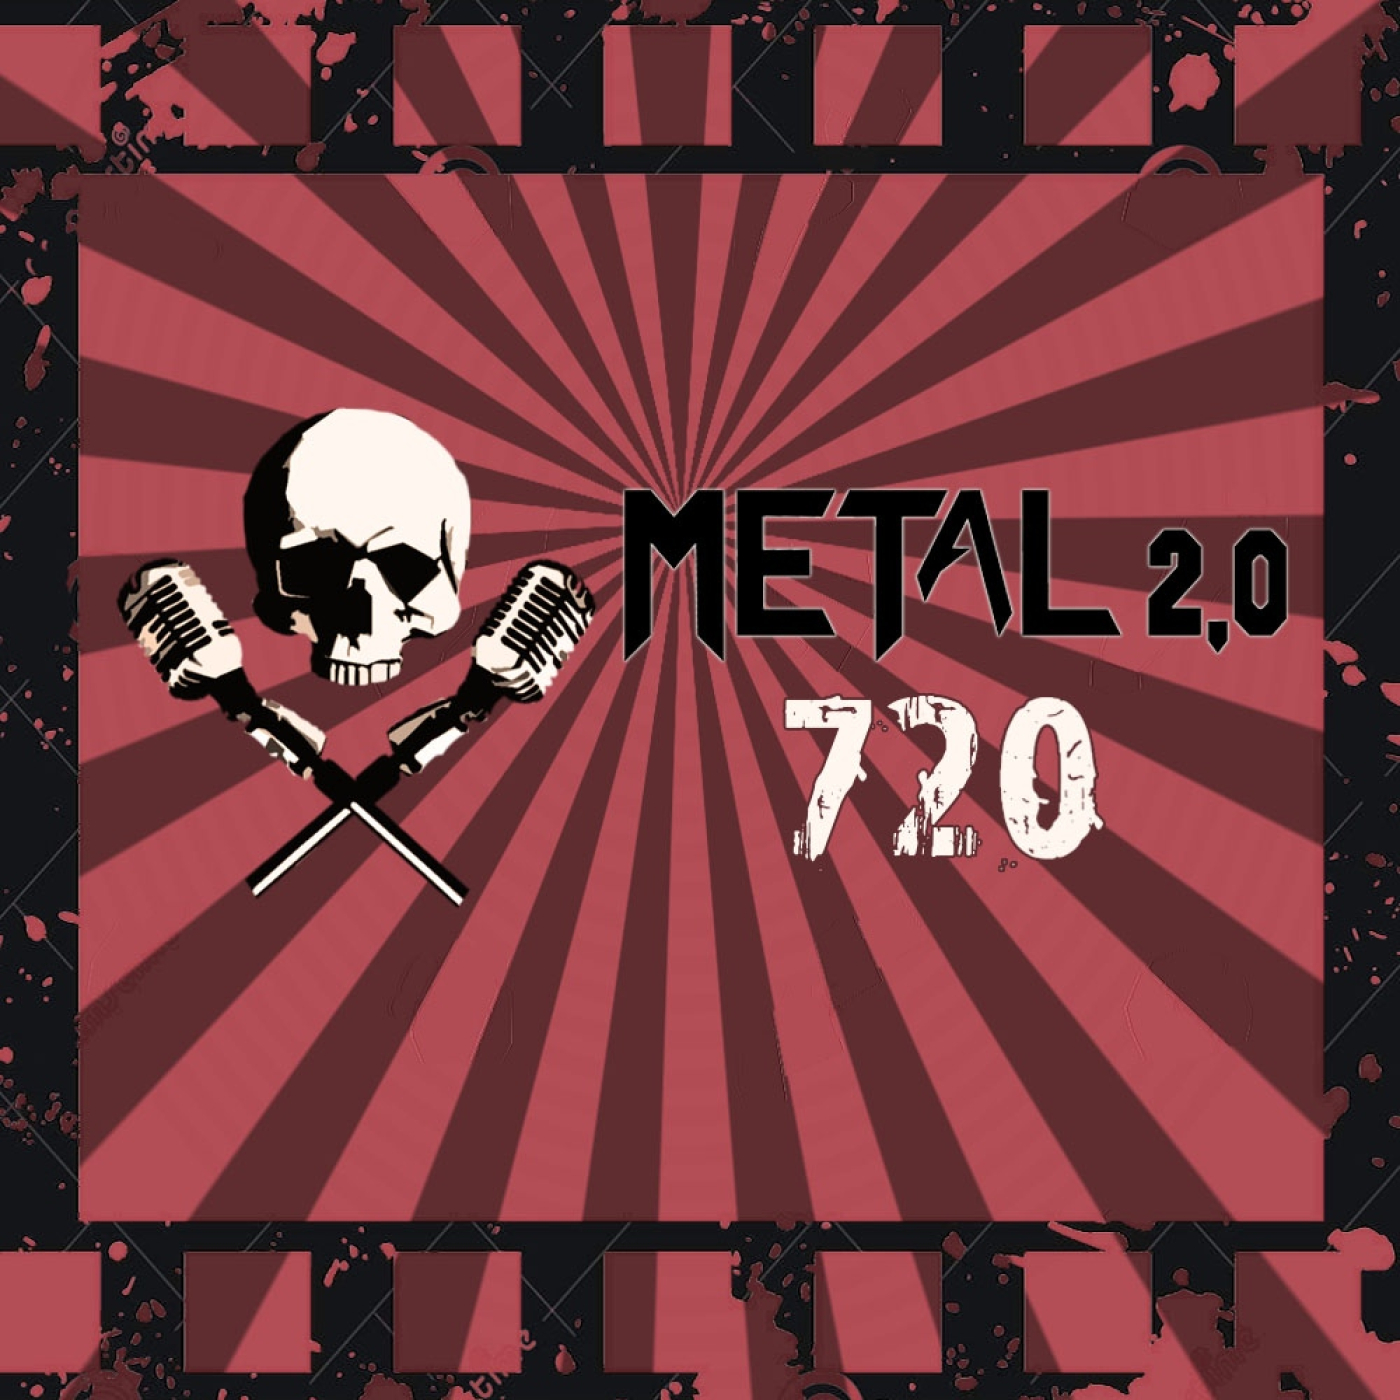 Metal 2.0 – 720